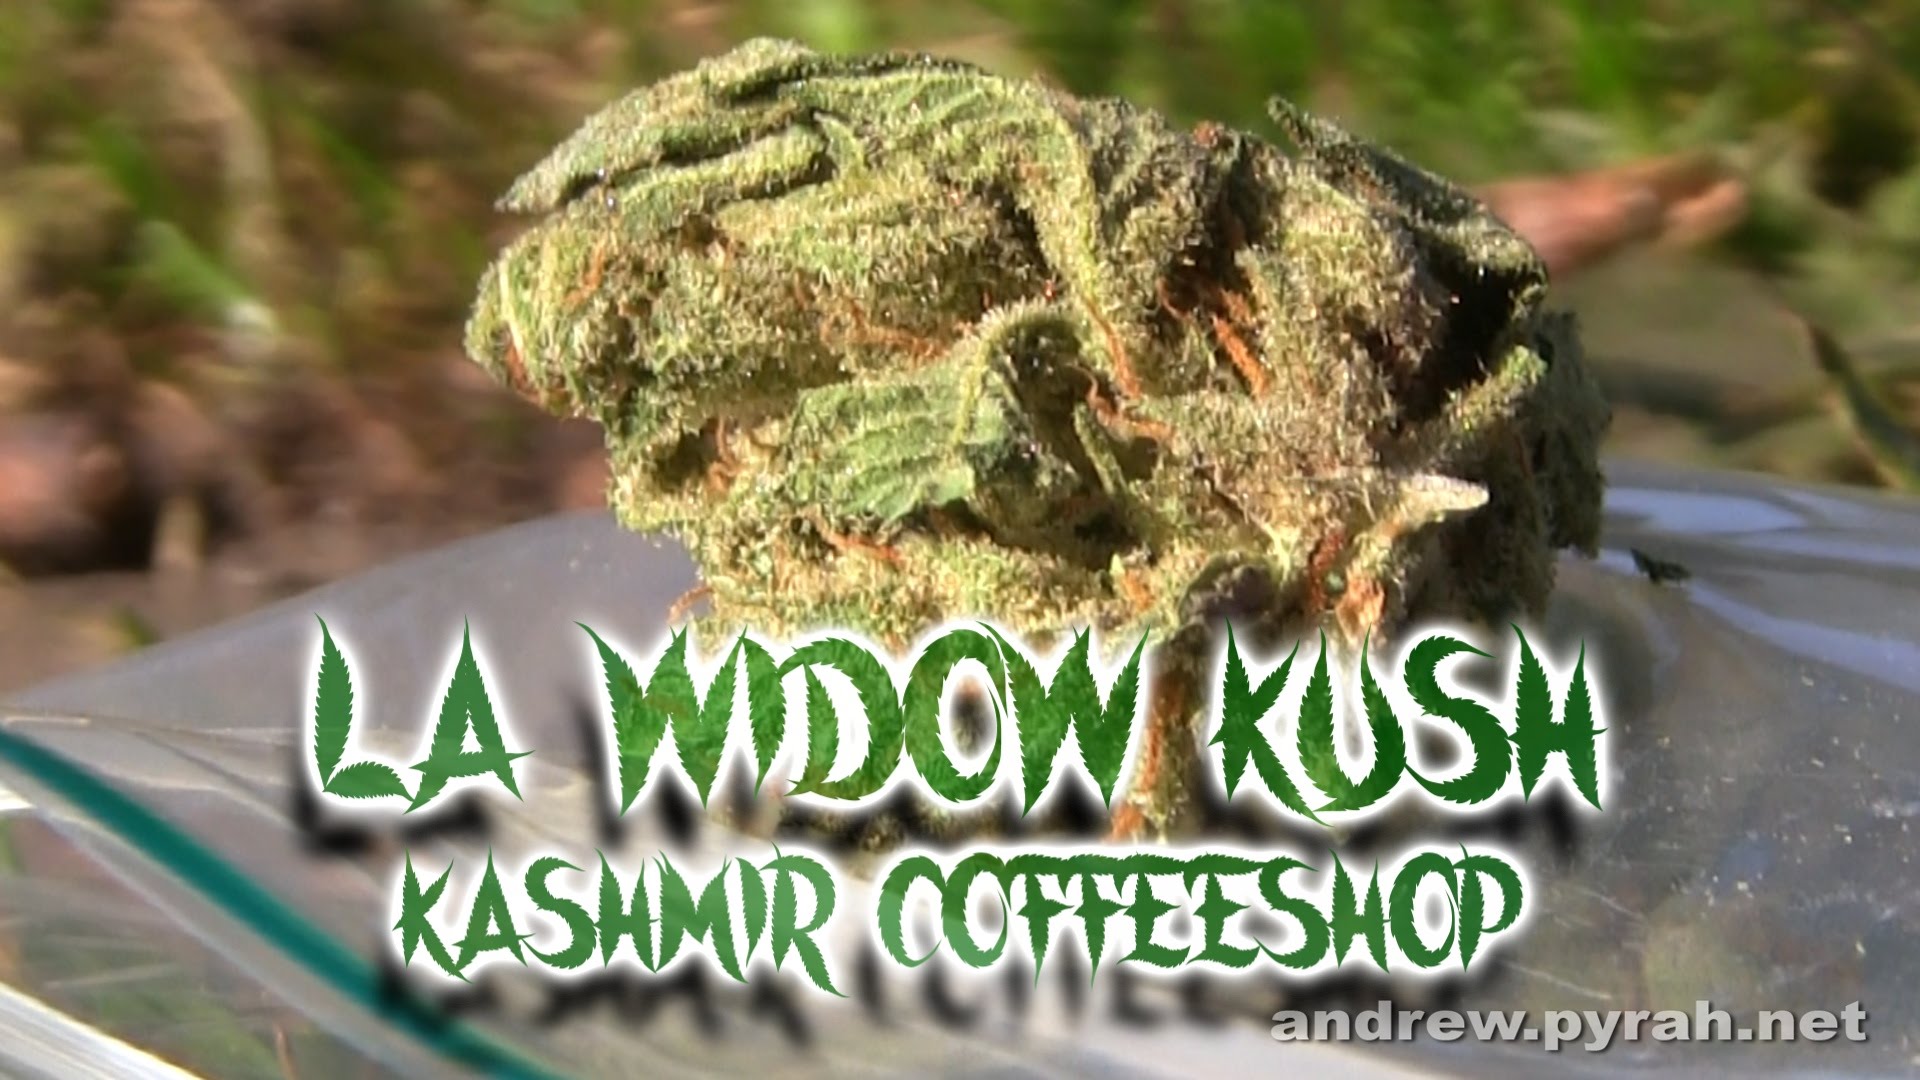 LA WIDOW KUSH Kashmir Coffeeshop & Flytlab H2Flo Vaporizer Review – Amsterdam Weed Review 2015